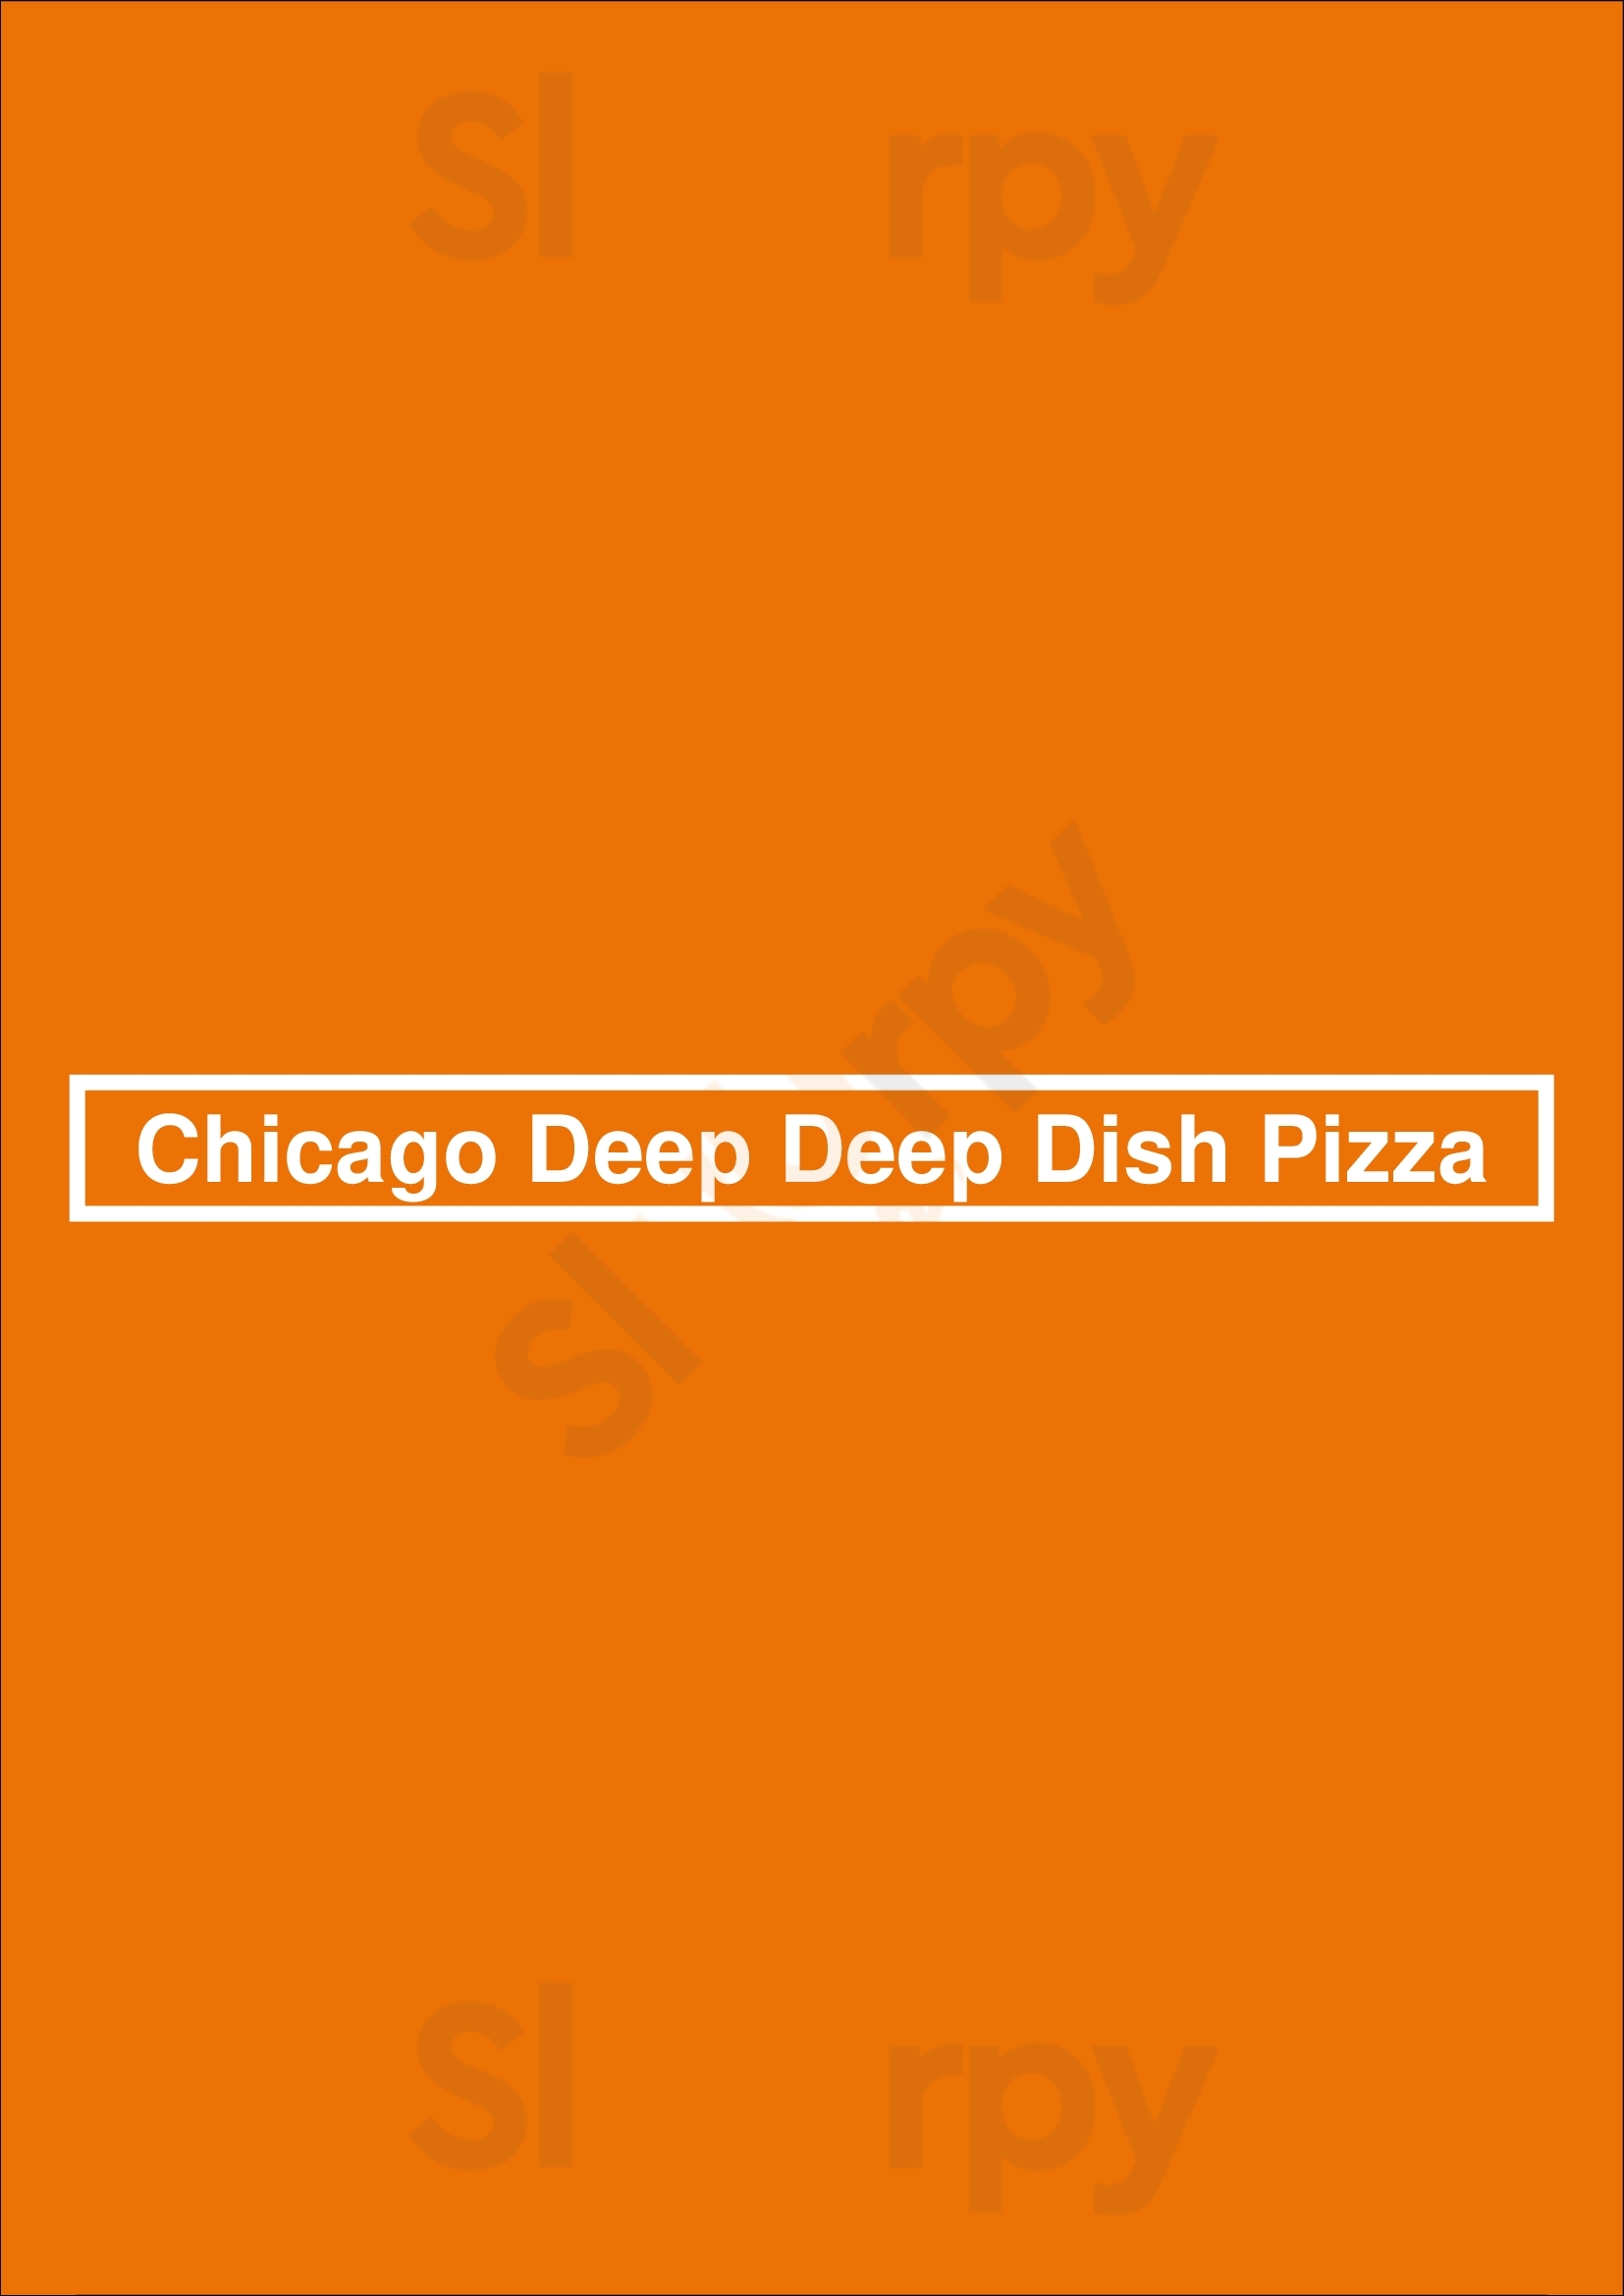 Chicago Deep Deep Dish Pizza Calgary Menu - 1